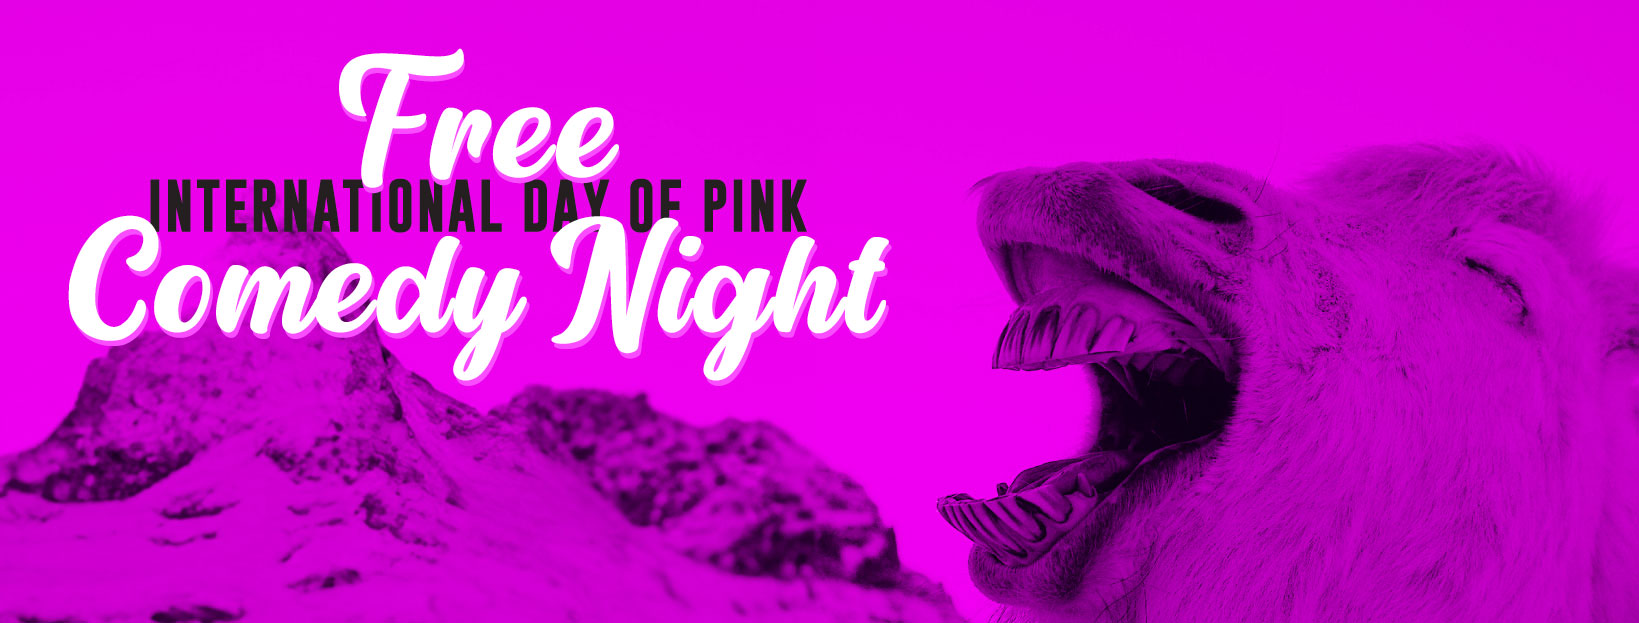 International Day of Pink Comedy Night